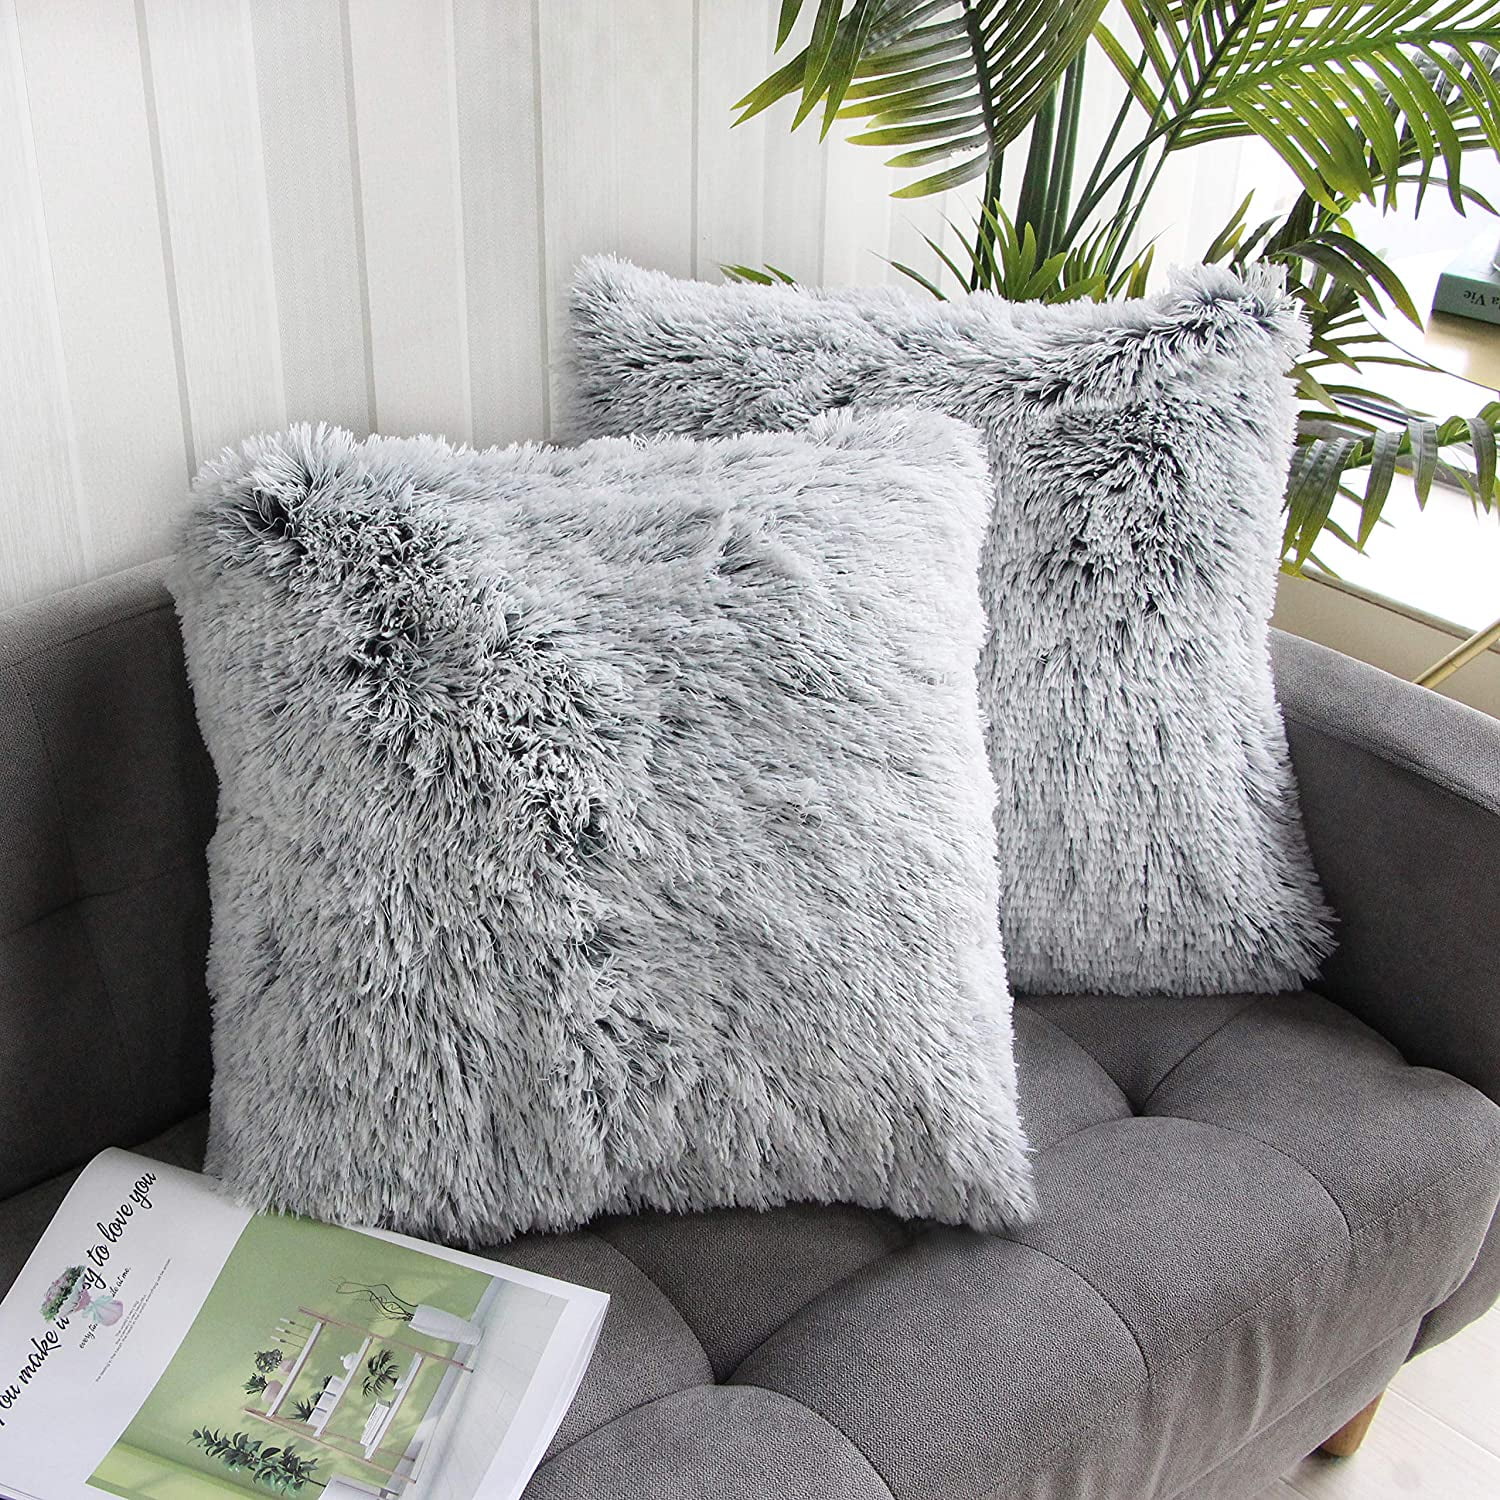 Brand new Faux fur Animal print cushion covers.Size18" X 18" 22" X 22" soft 